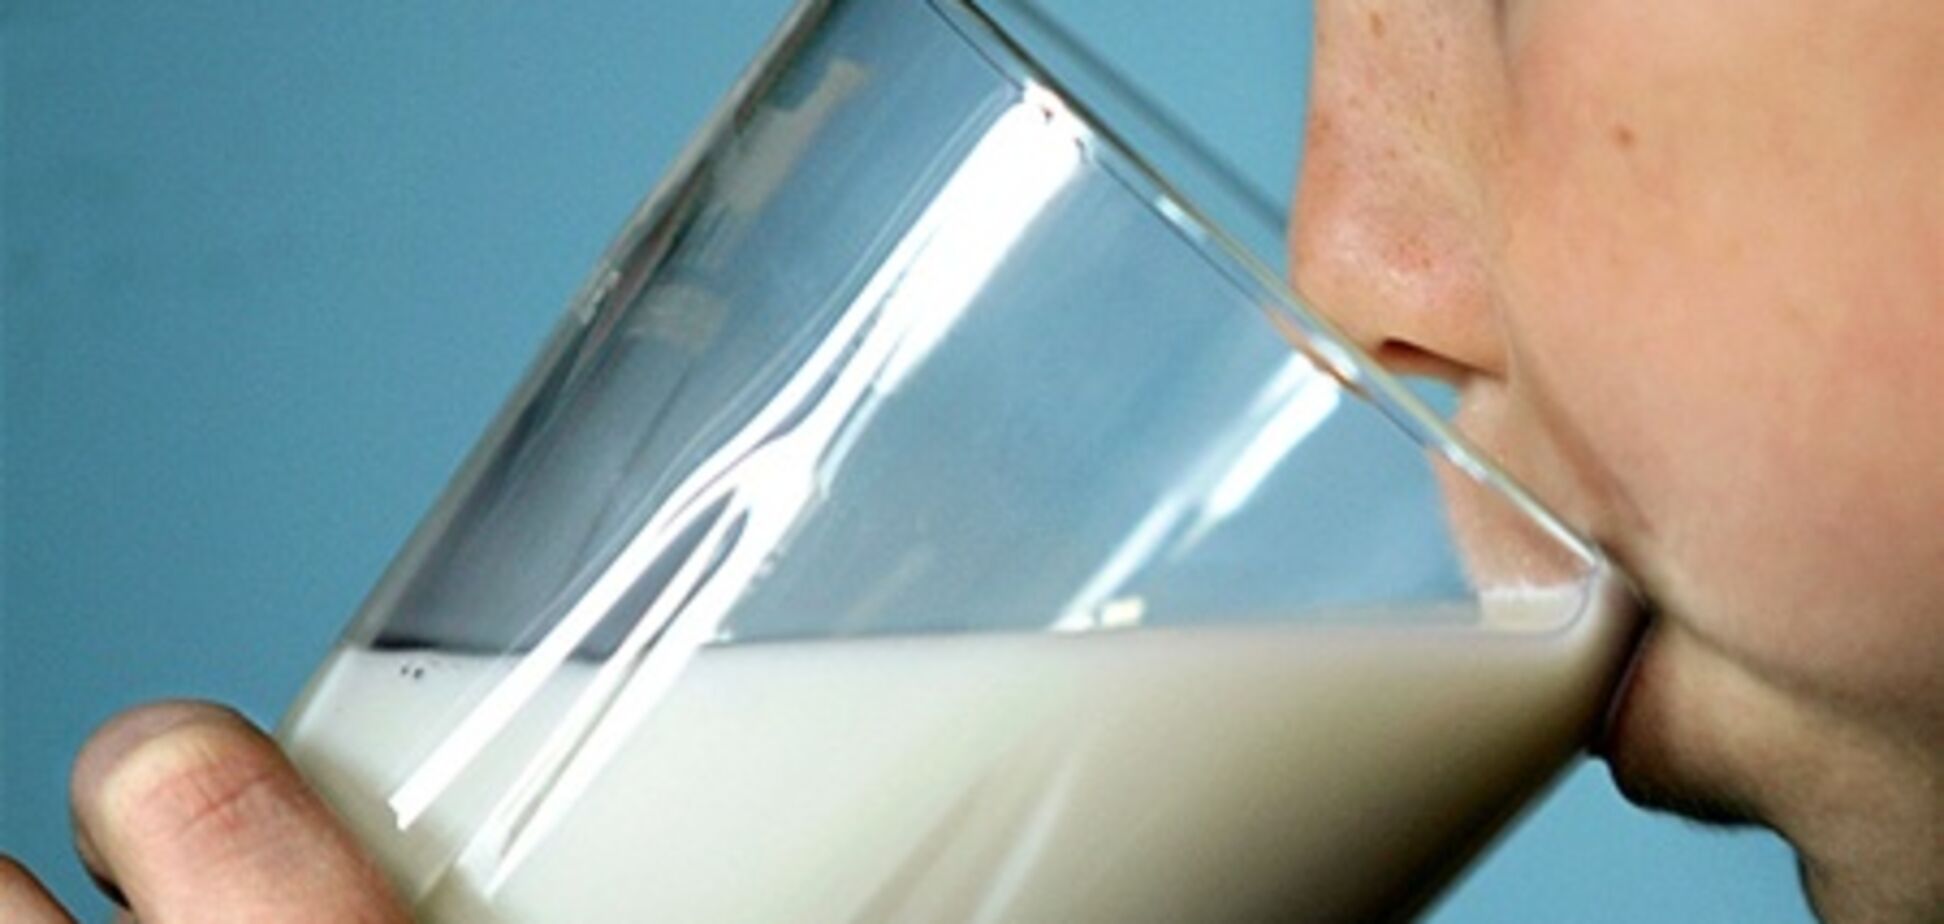 Рост цен на молоко побил все рекорды